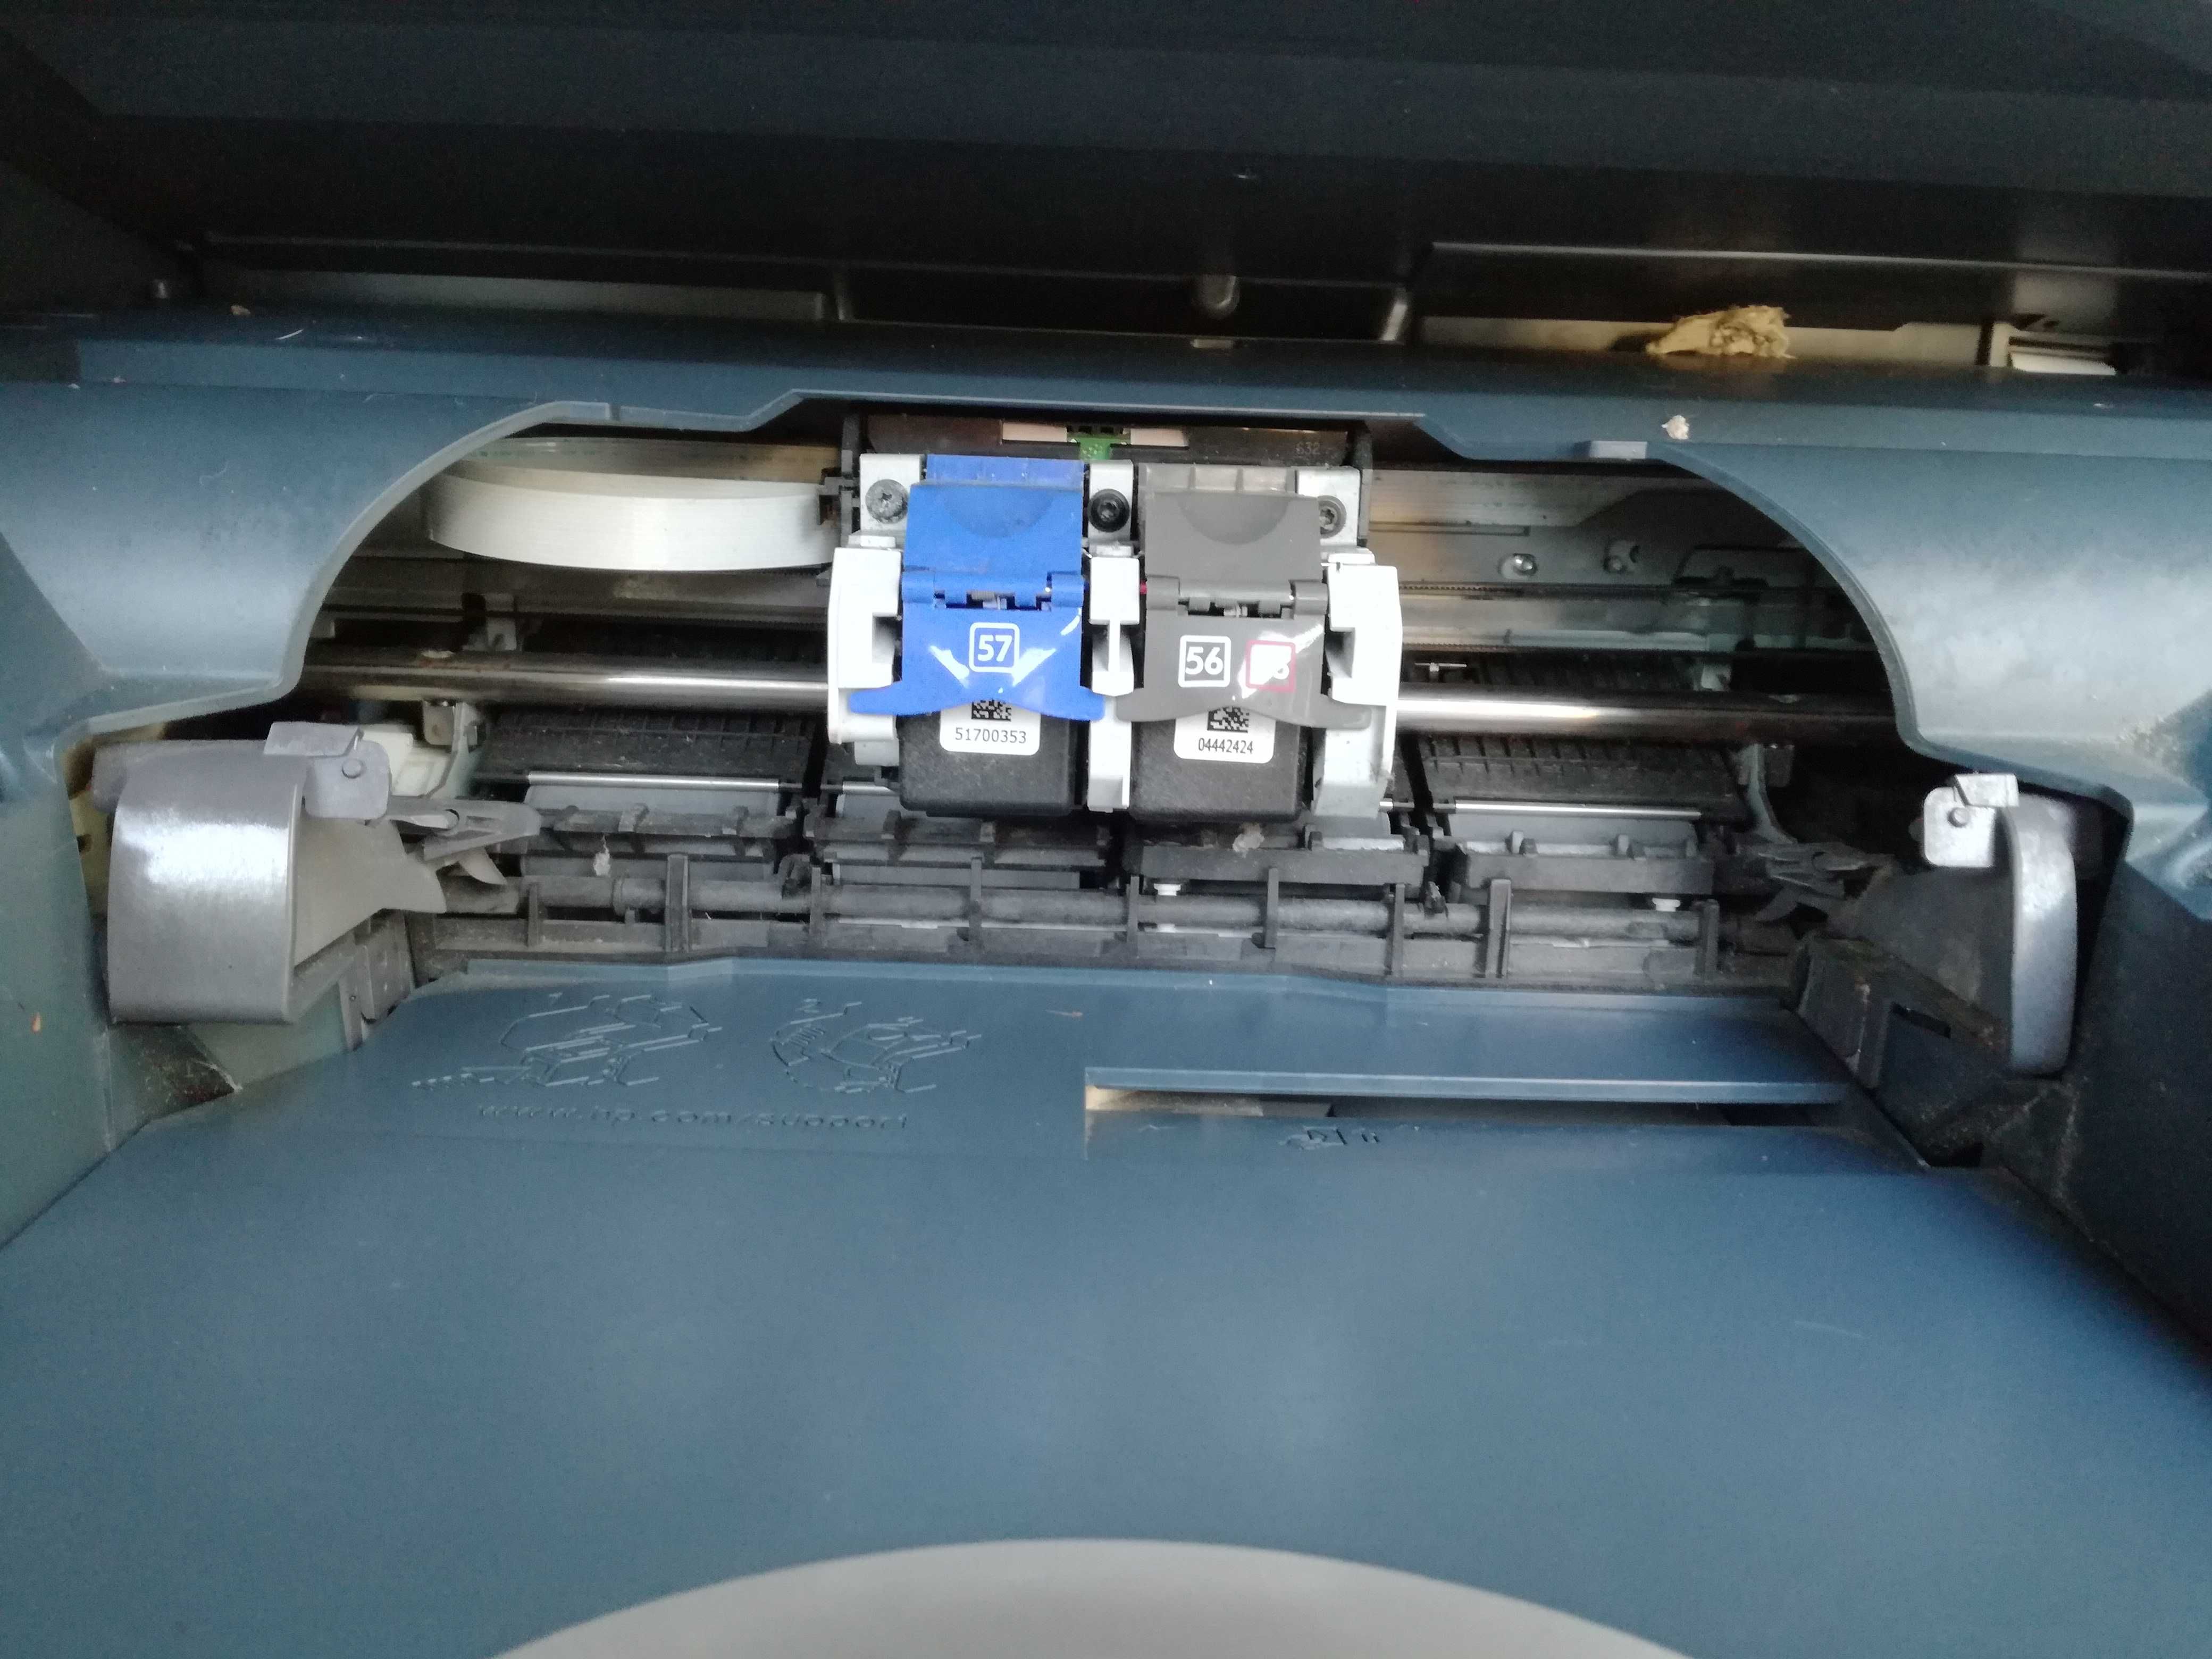 Impressora HP multifunções psc 2175